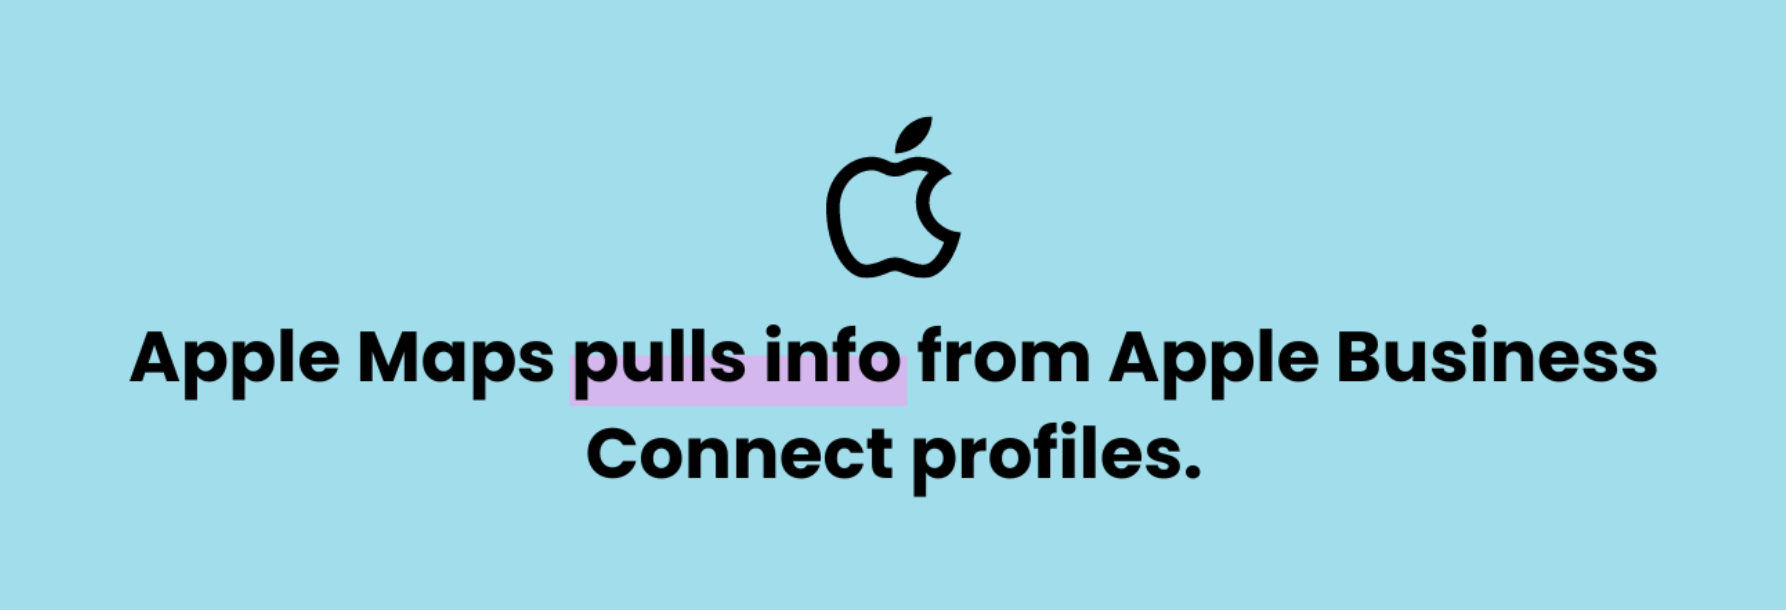 apple maps graphic